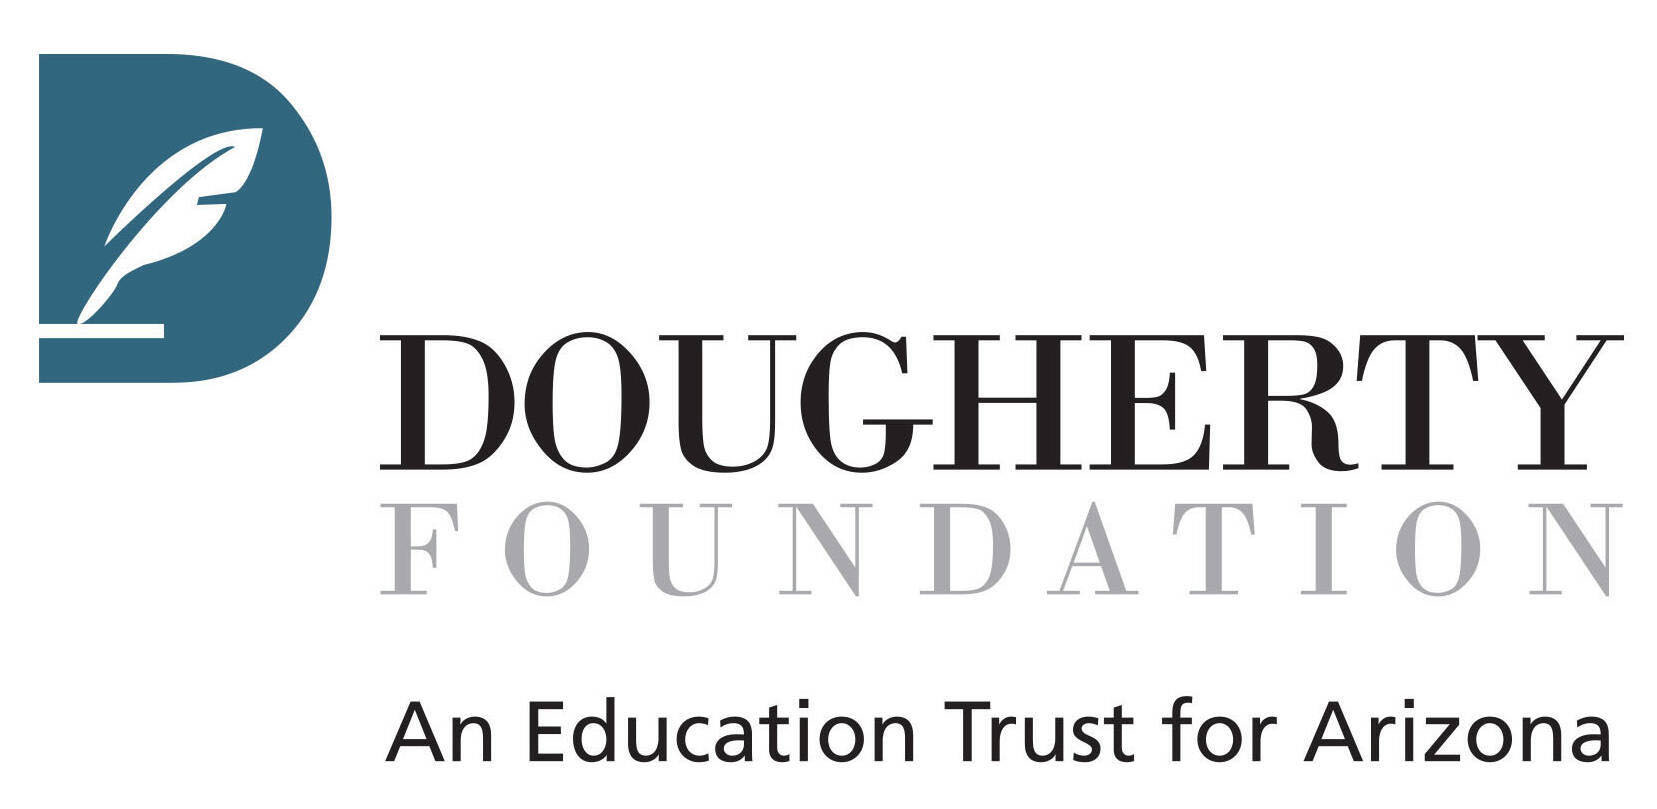 dougherty-foundation-logo